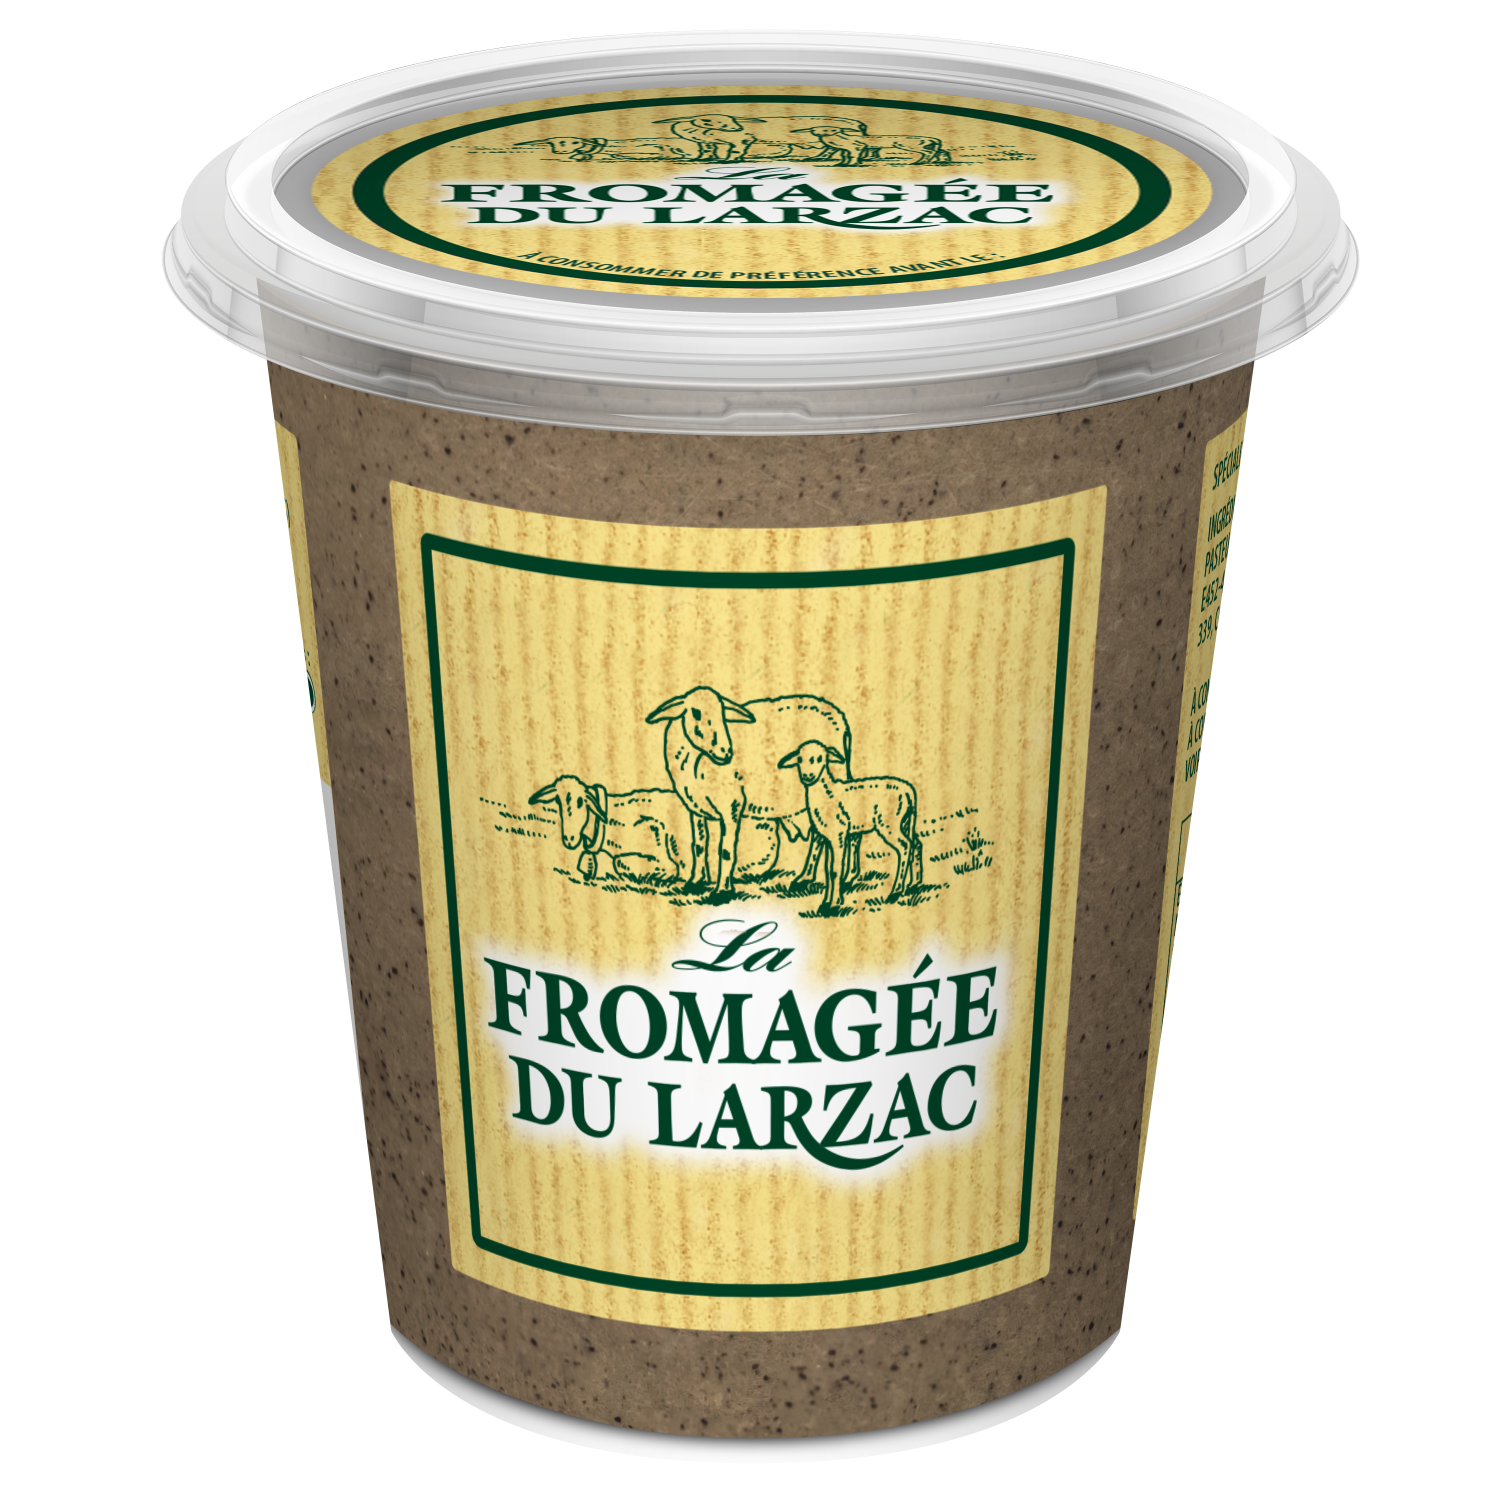 La Fromagée du Larzac